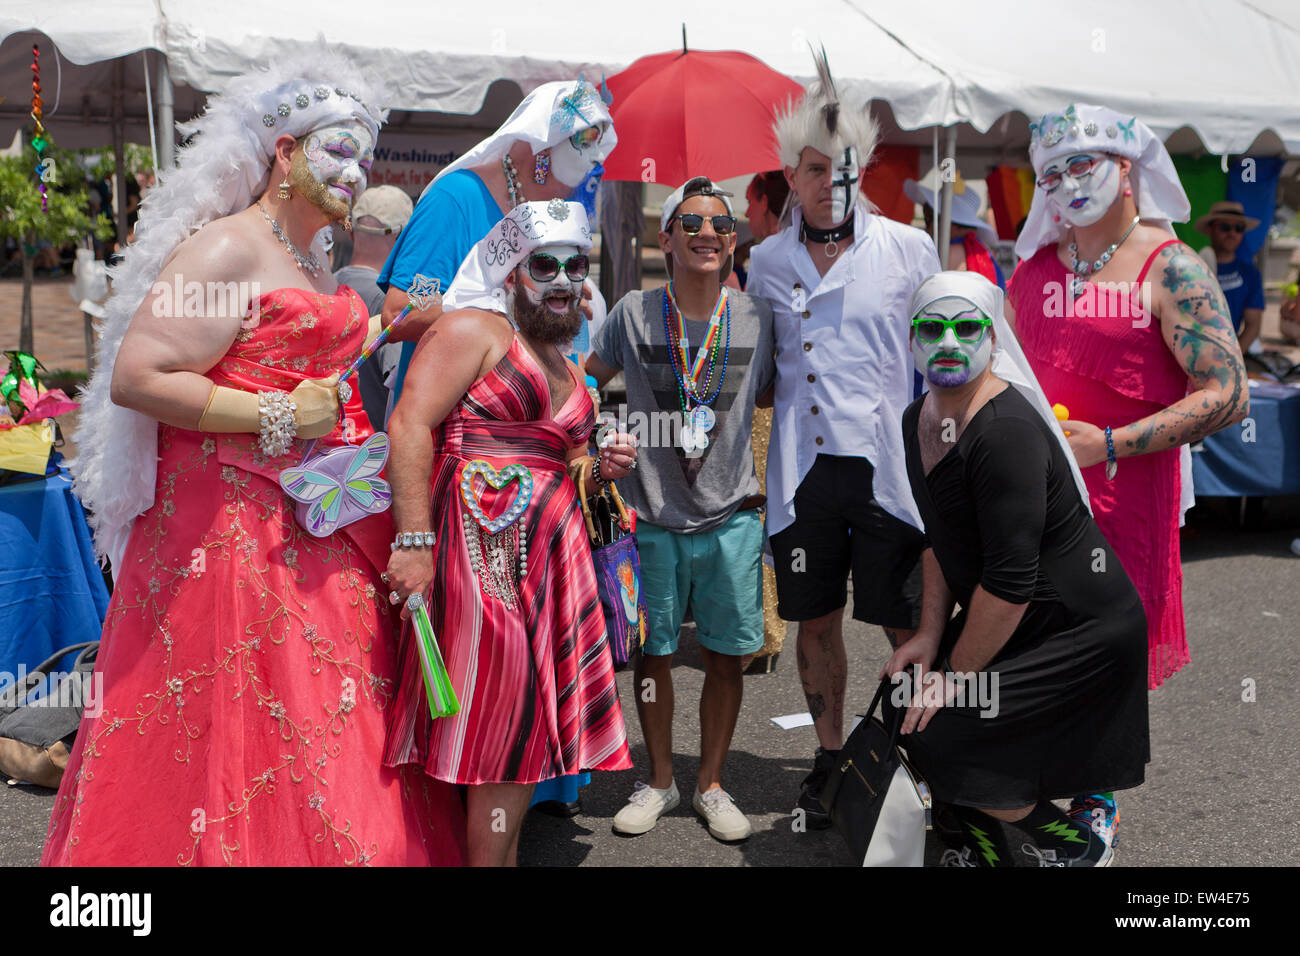 Men dressed in drag at Capital Pride Festival 2015 - Washington, DC USA Stock Photo